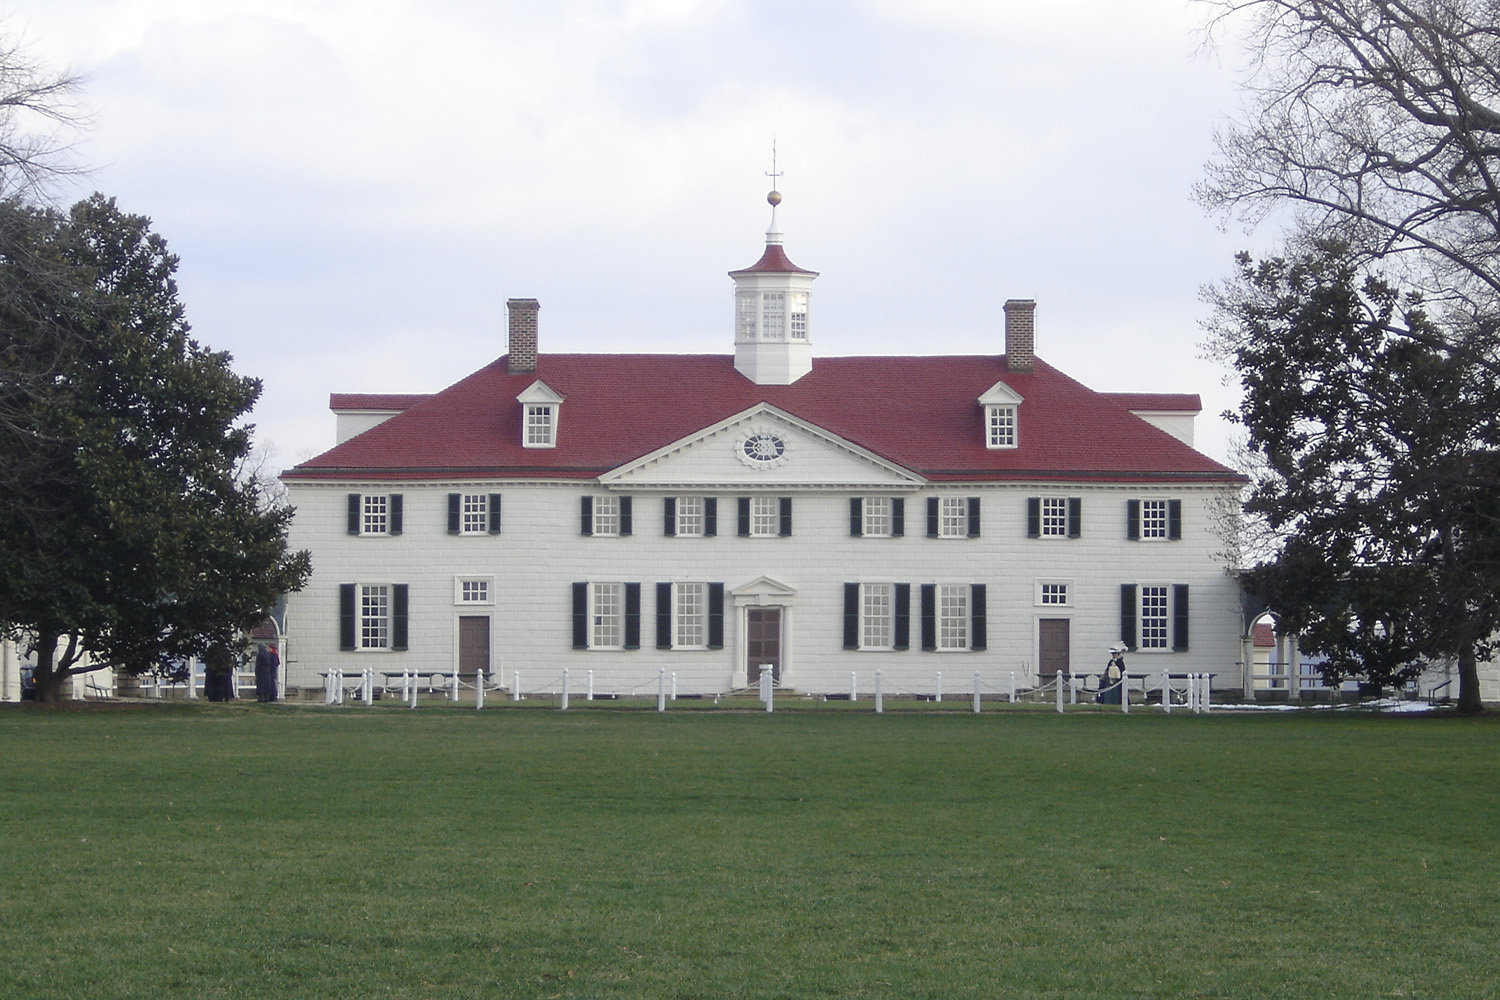 George Washington's residence, Mount Vernon